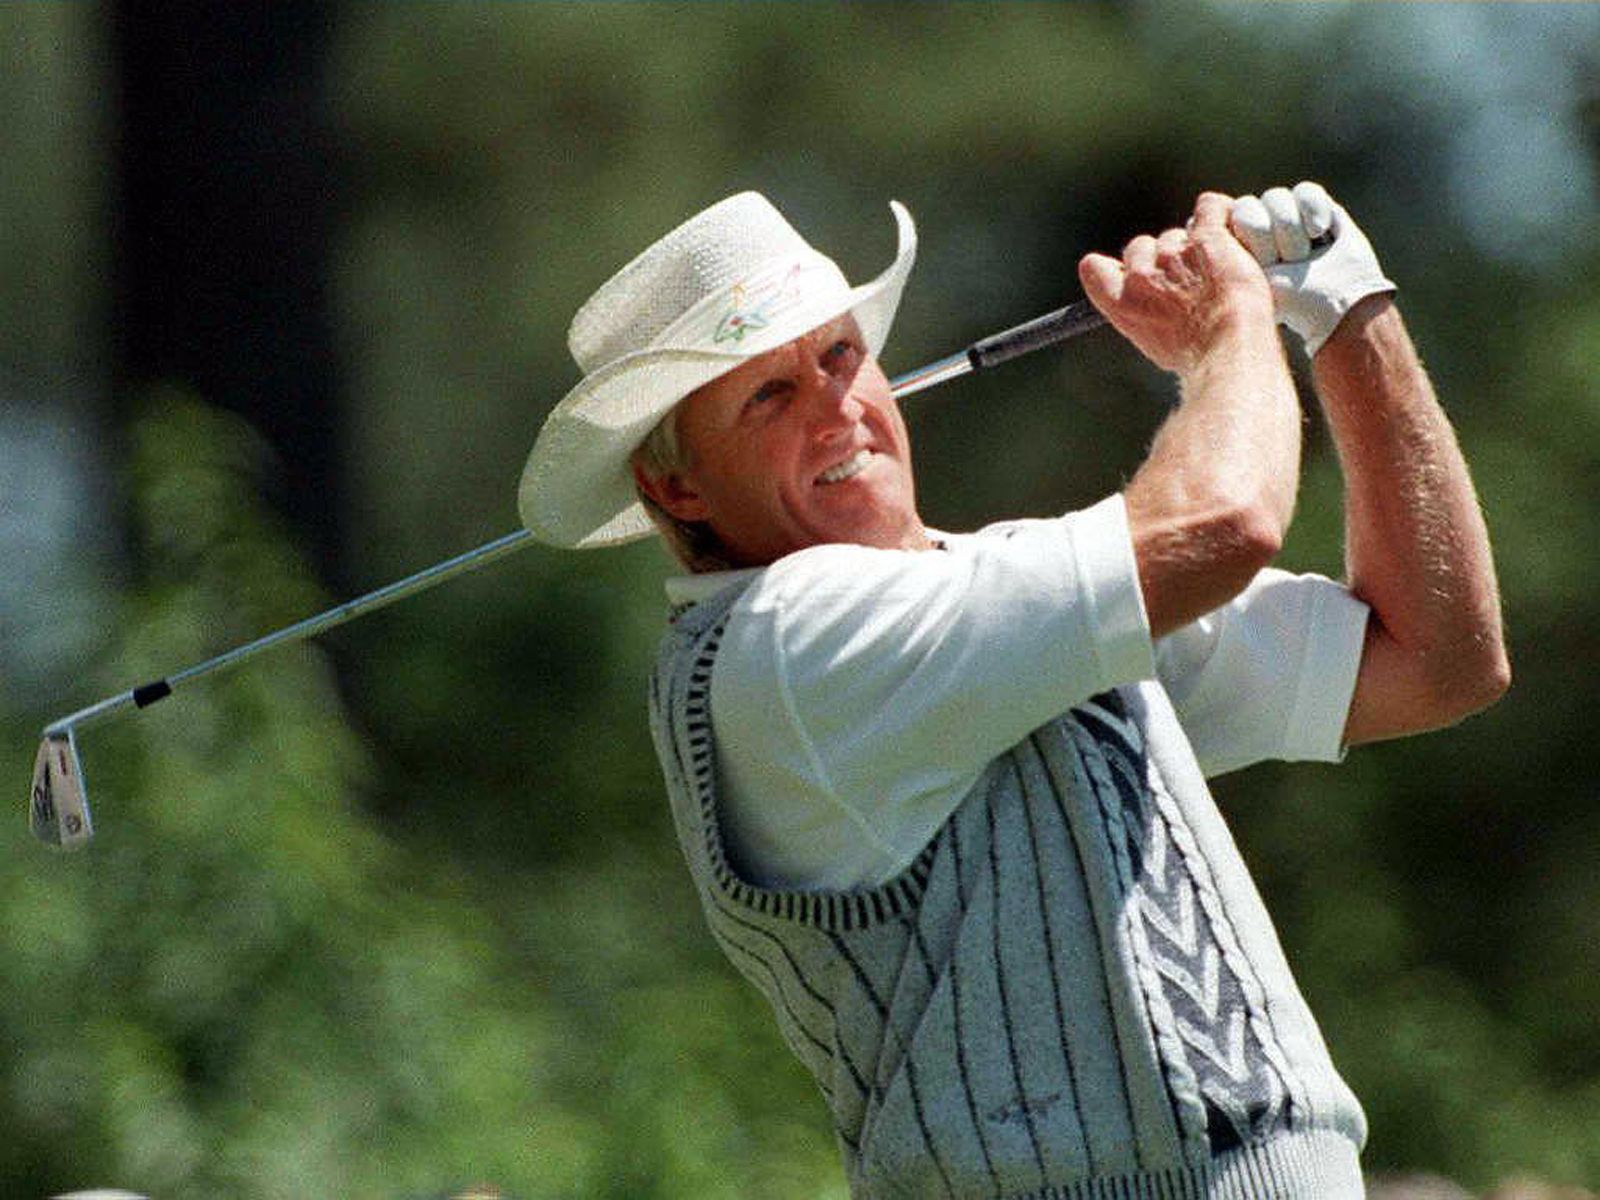 PGA golfer Greg Norman buys Sarasota toy company